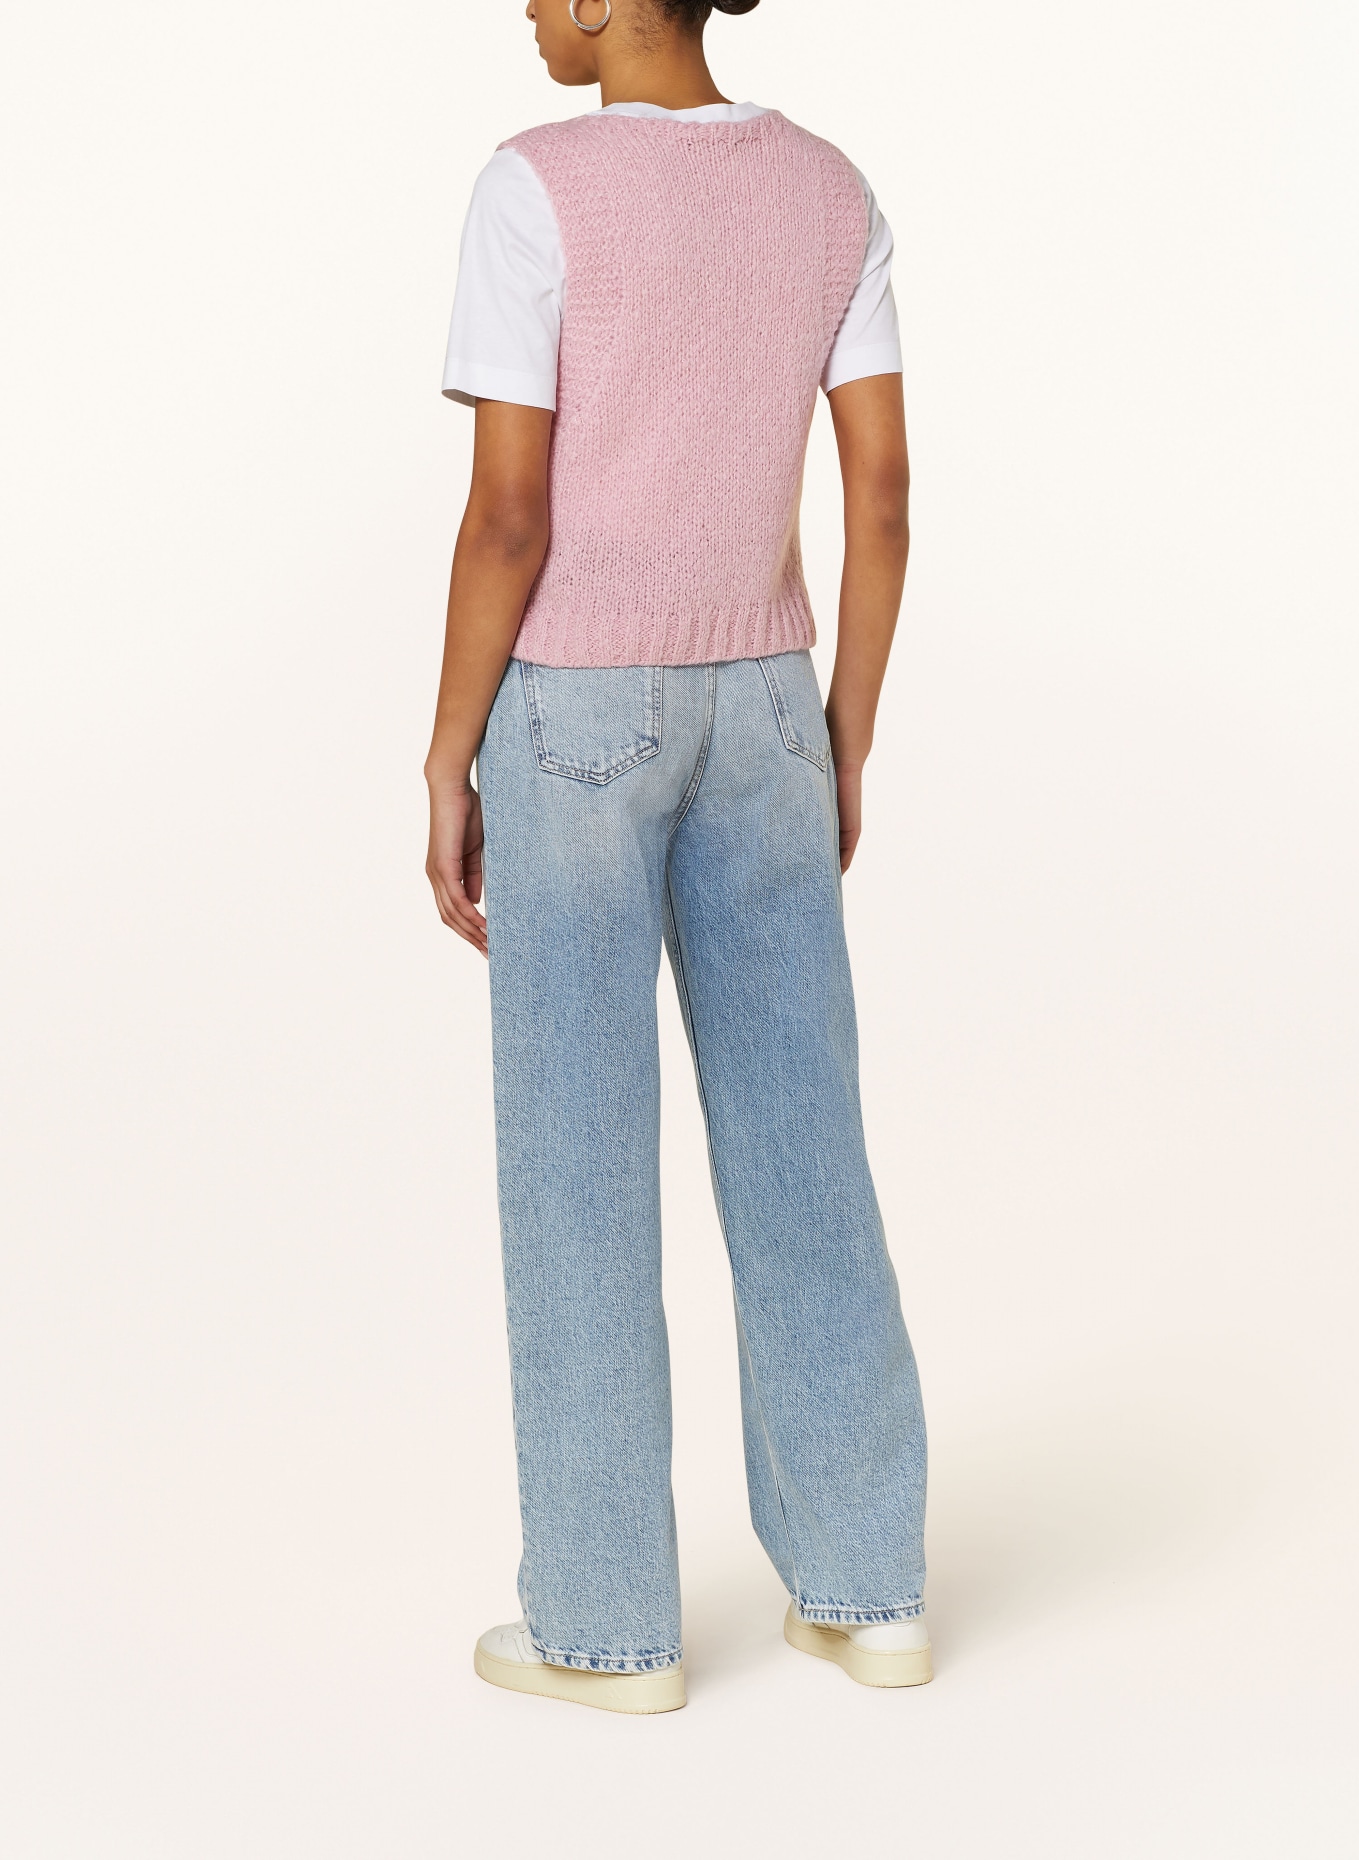 oui Sweater vest, Color: PINK (Image 3)